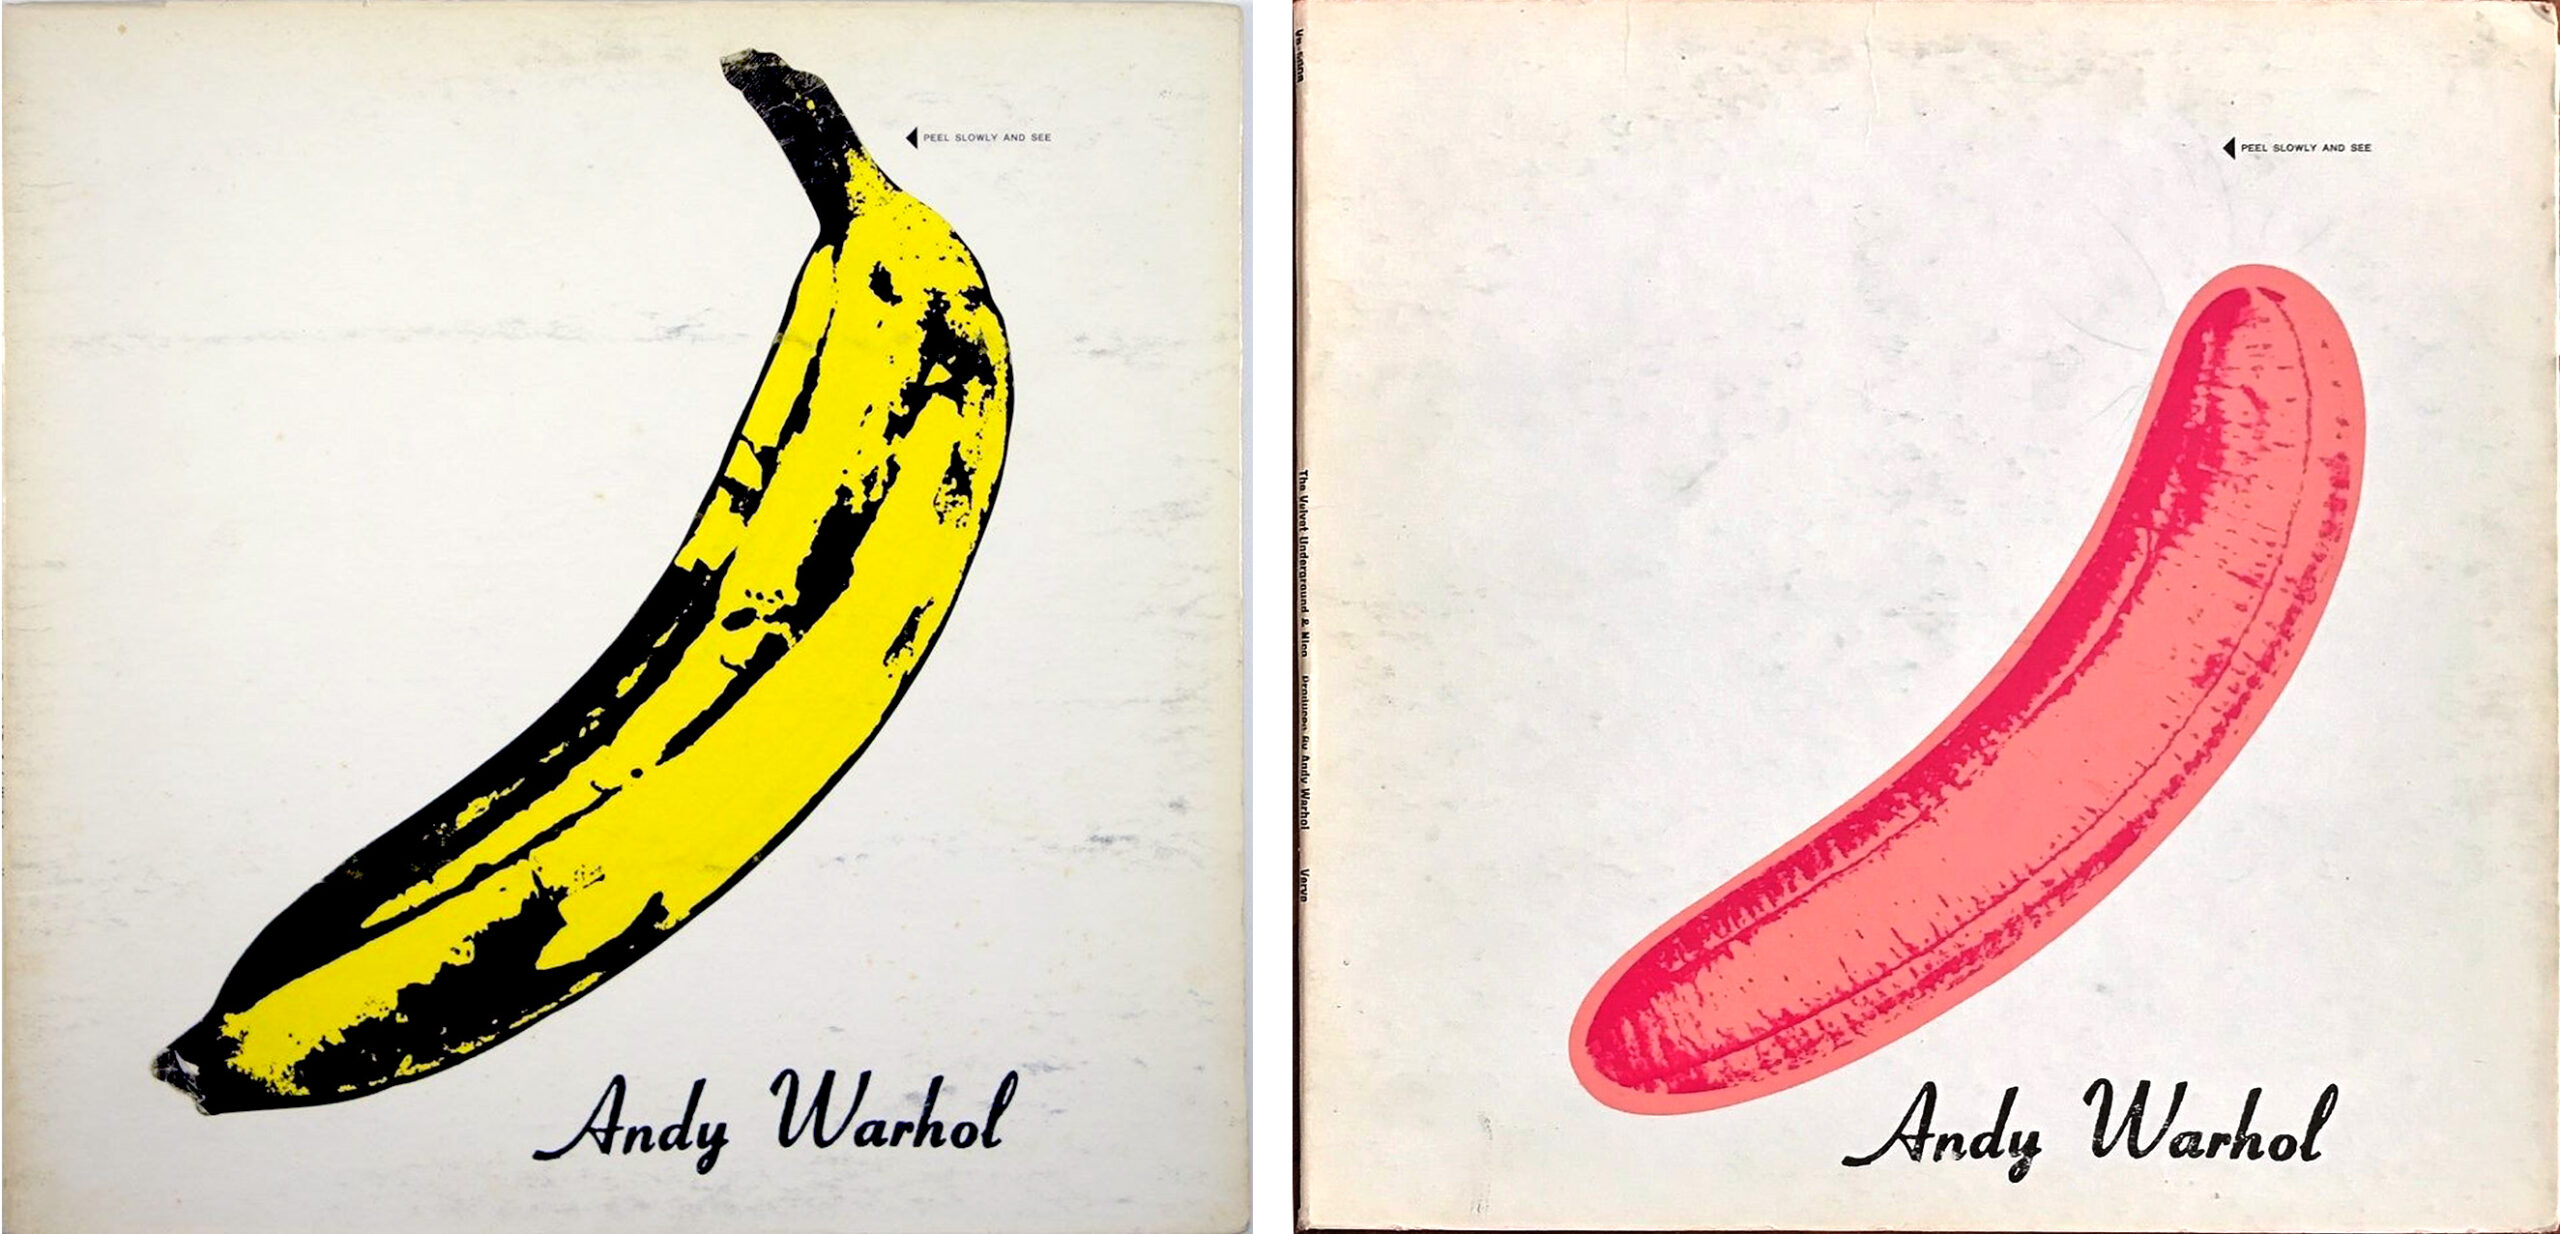 velvet-underground-album-vinyle-banane-warhol-1967-banane